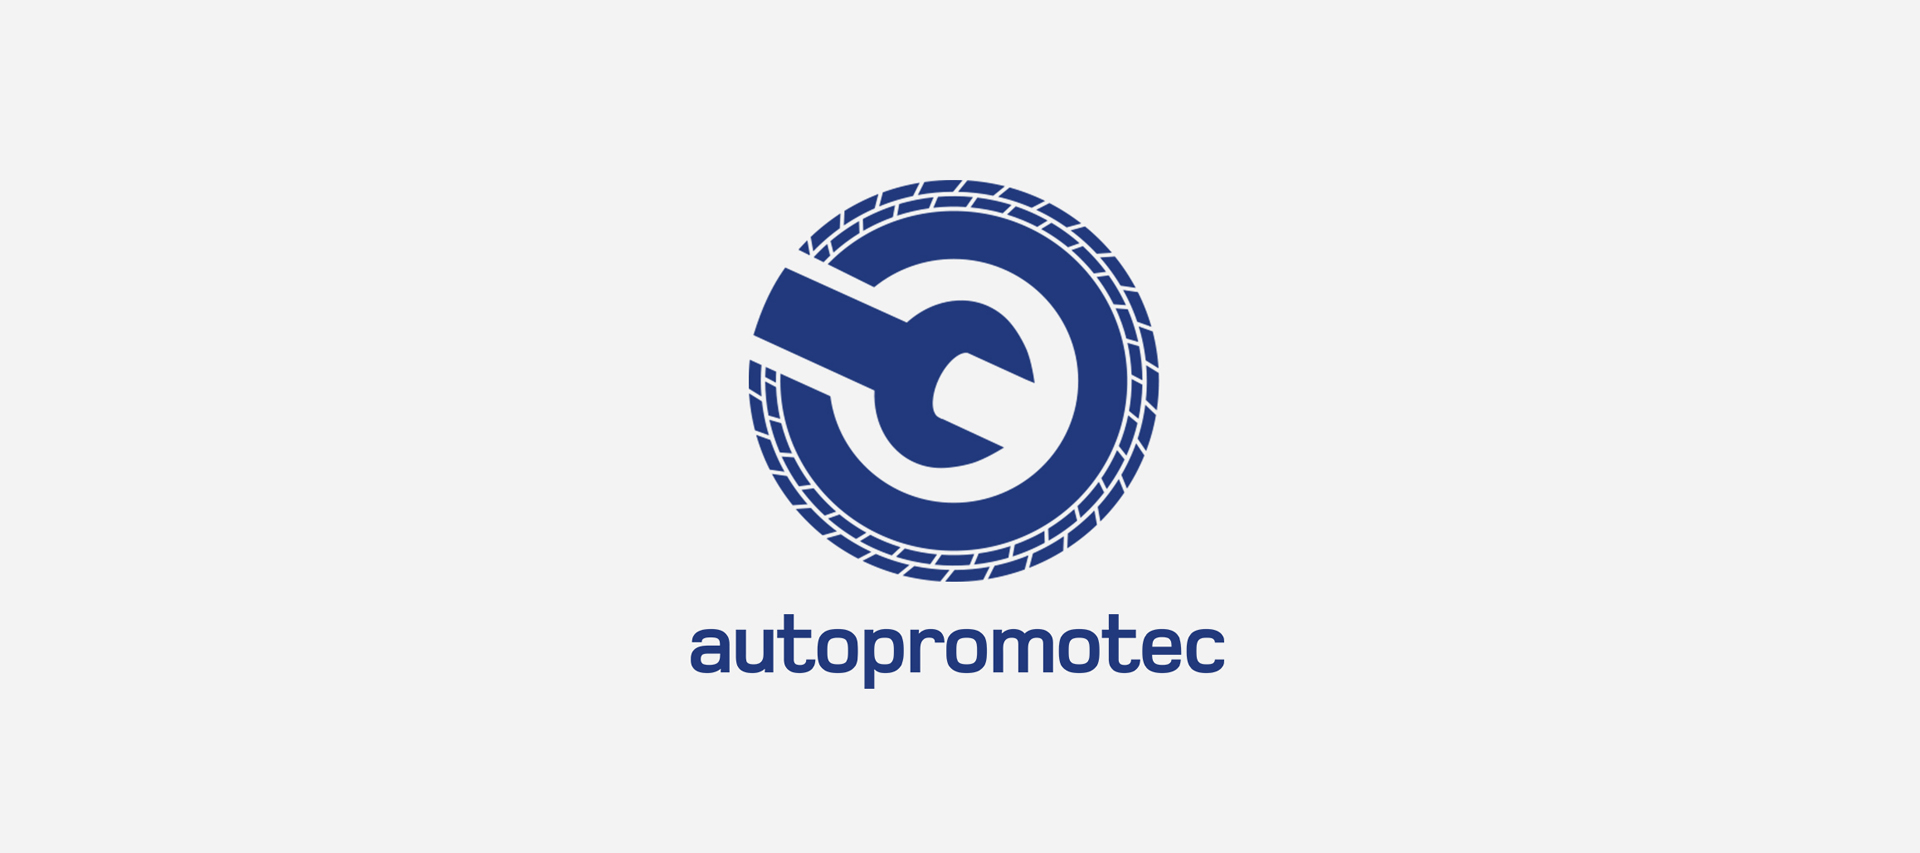 BlitzRotary at Autopromotec 2019